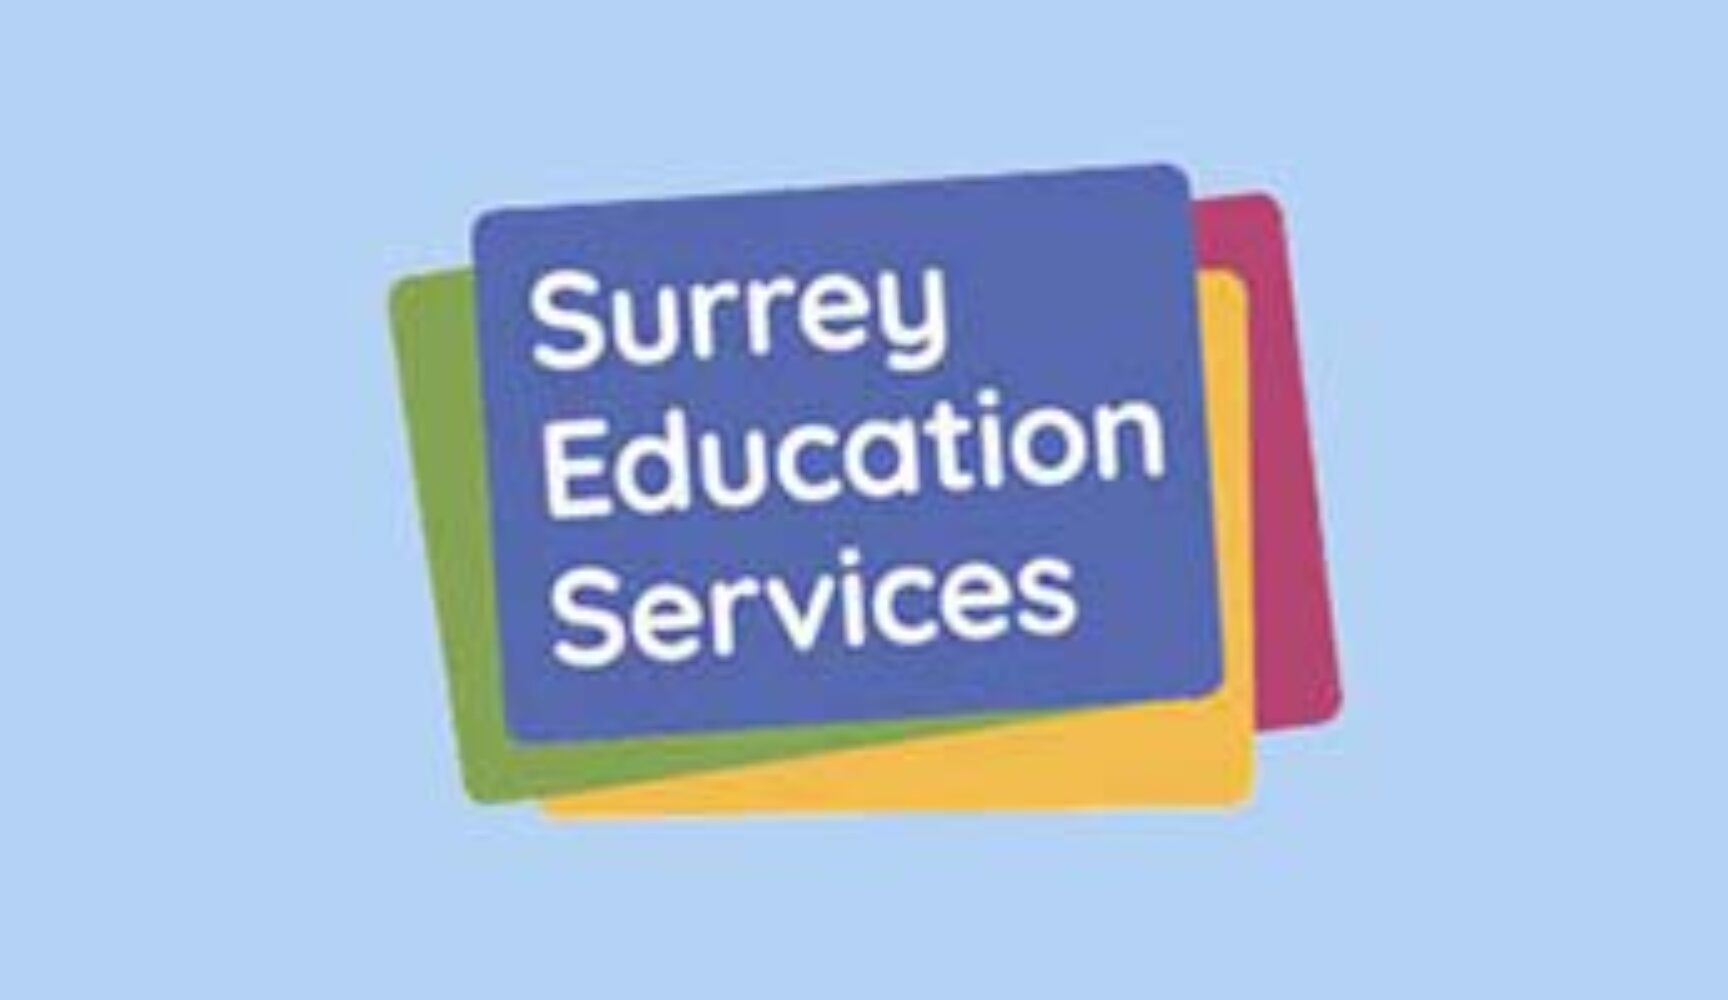 Surrey Education Services Conference logo